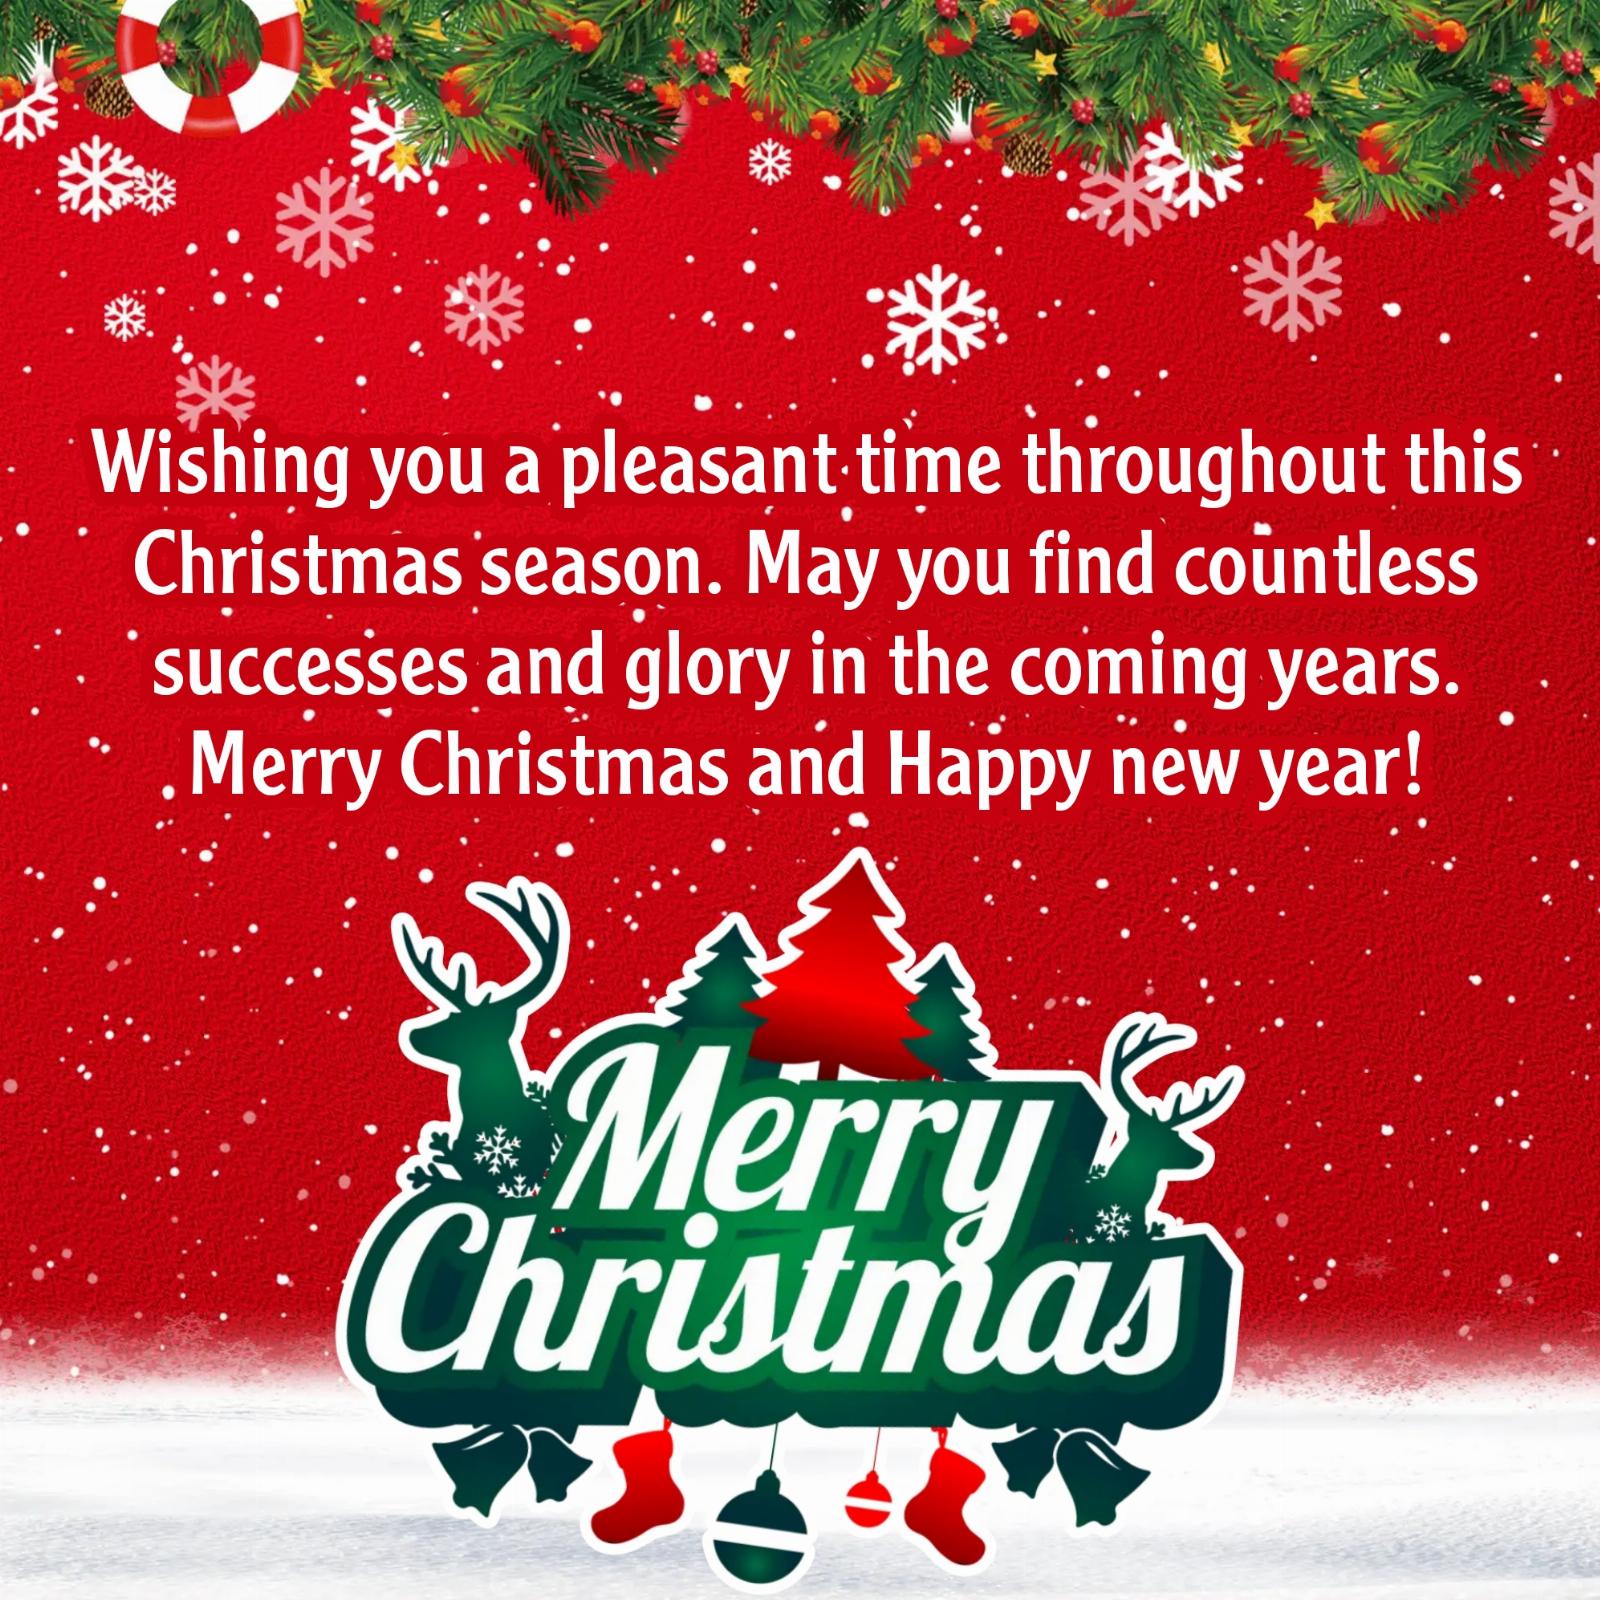 Wishing you a pleasant time throughout this Christmas season